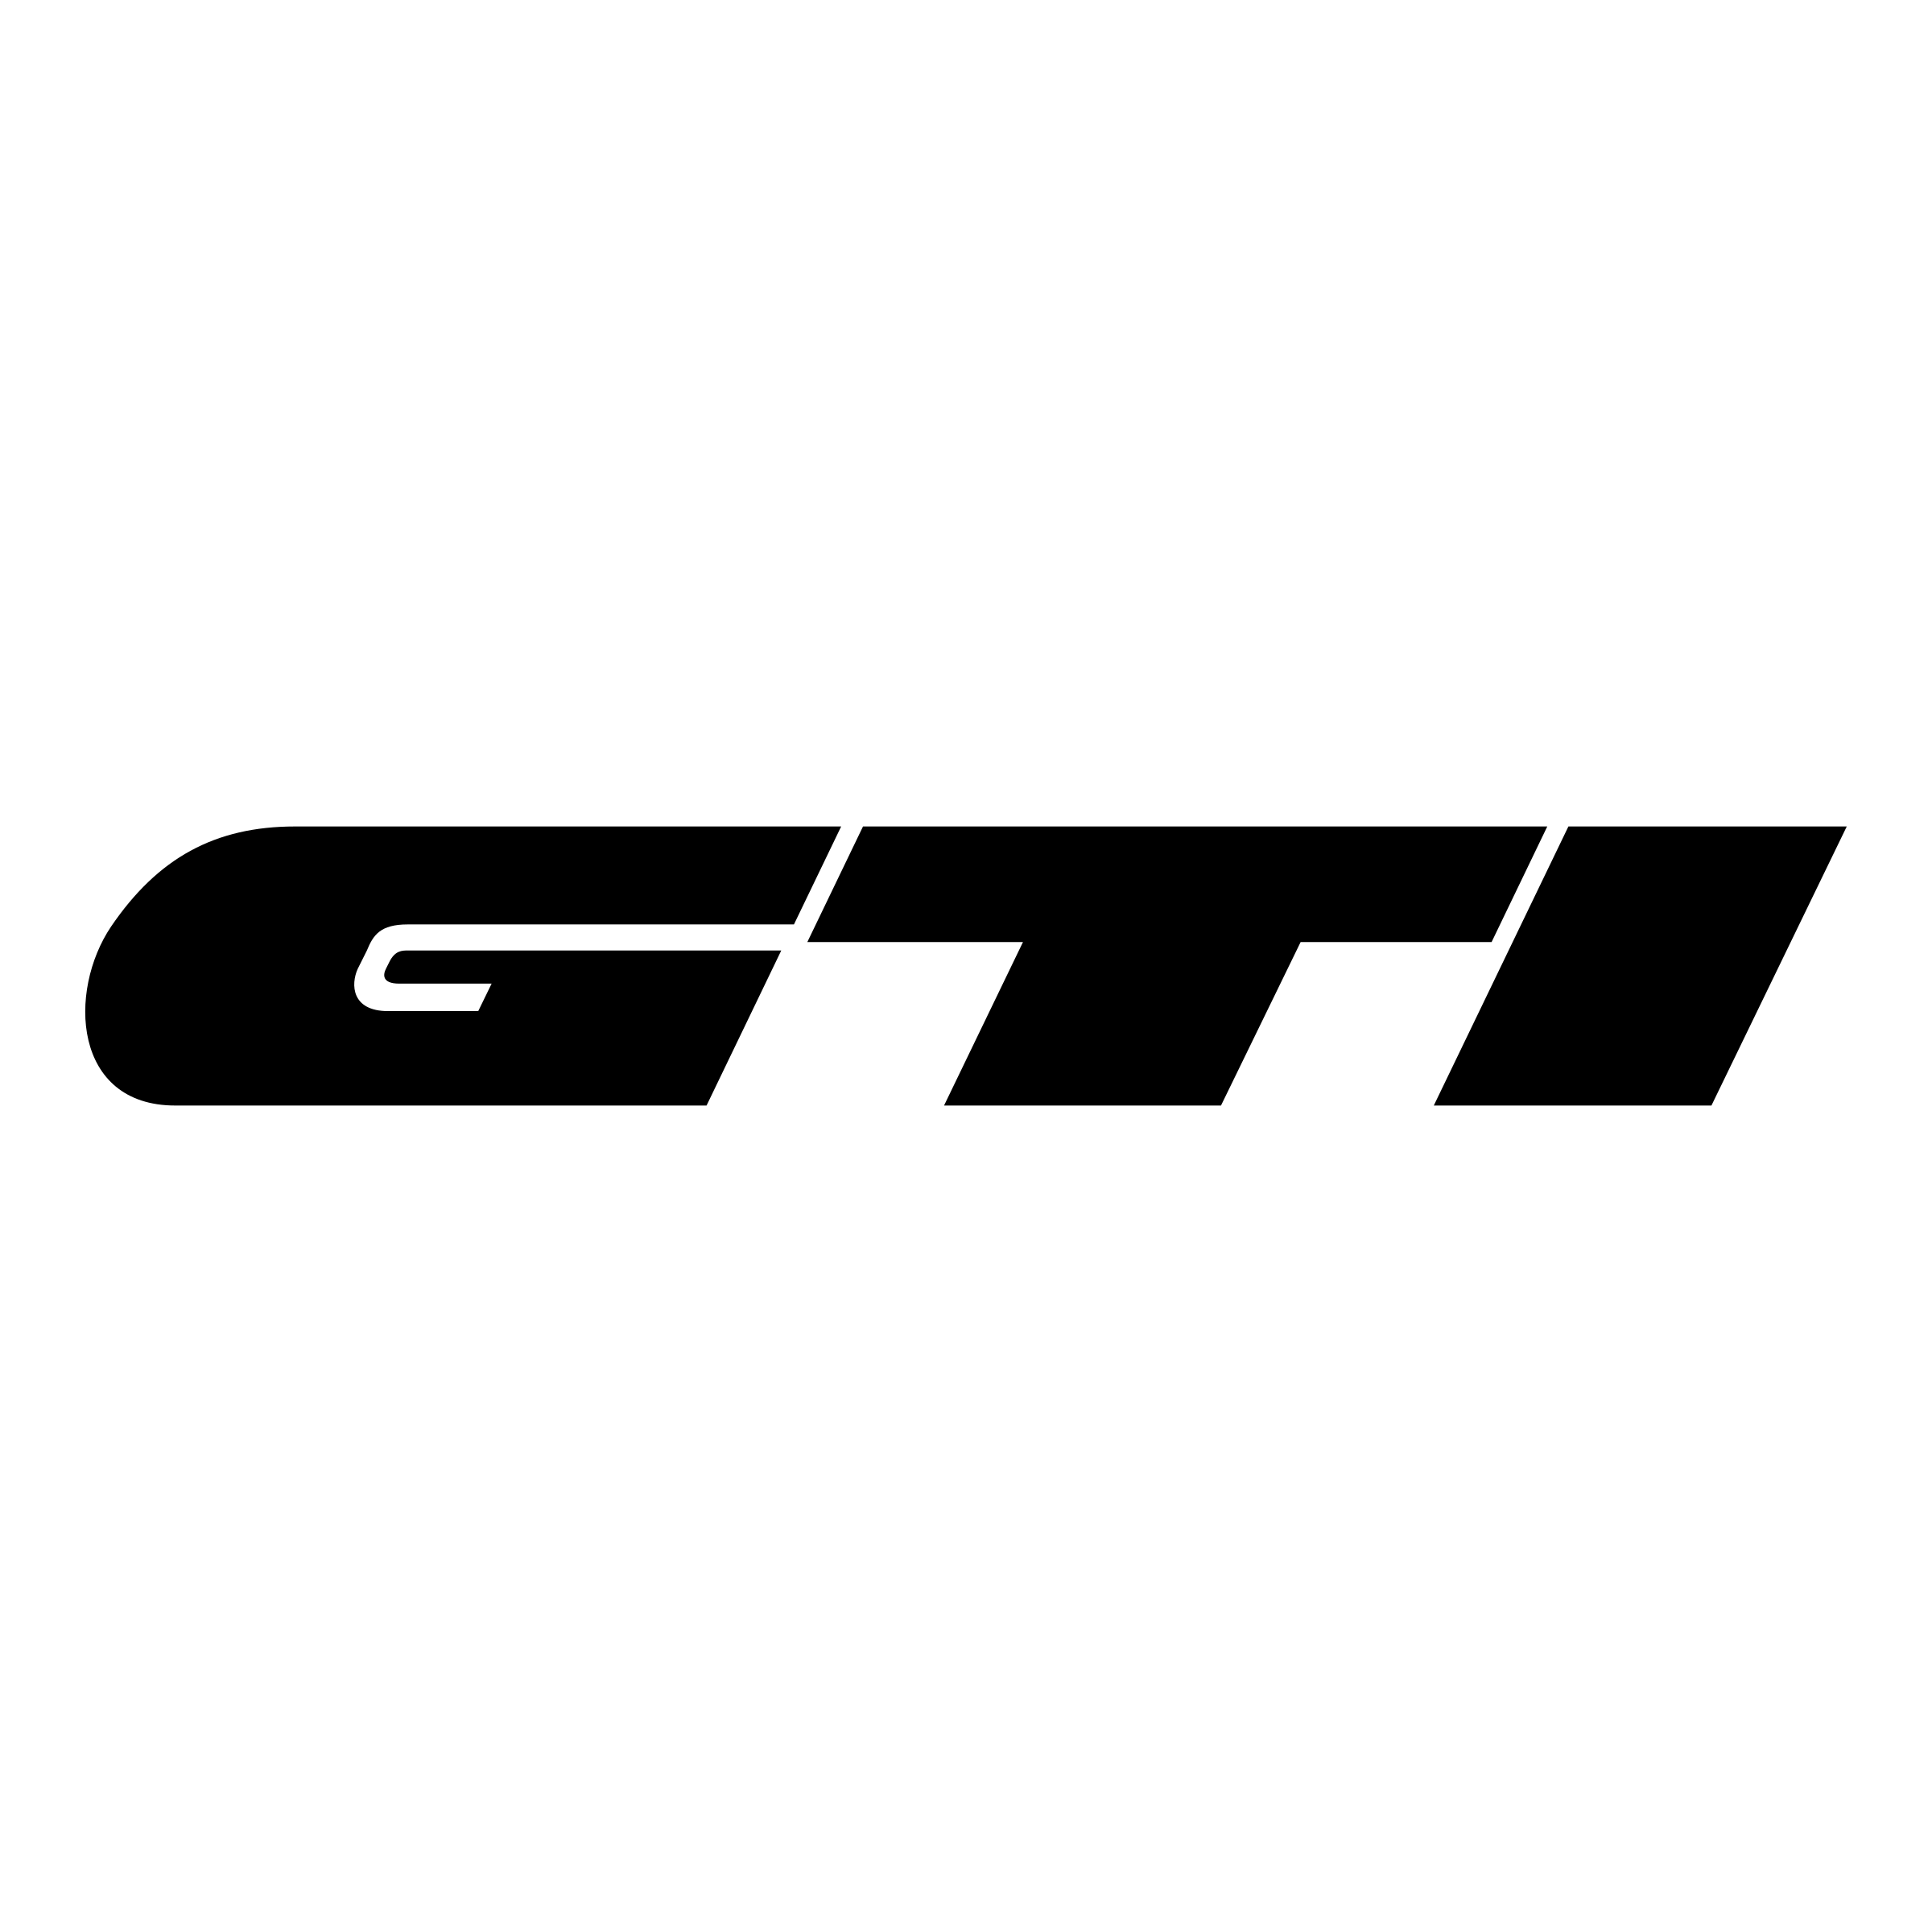 GTI Logo - GTI Logo PNG Transparent & SVG Vector